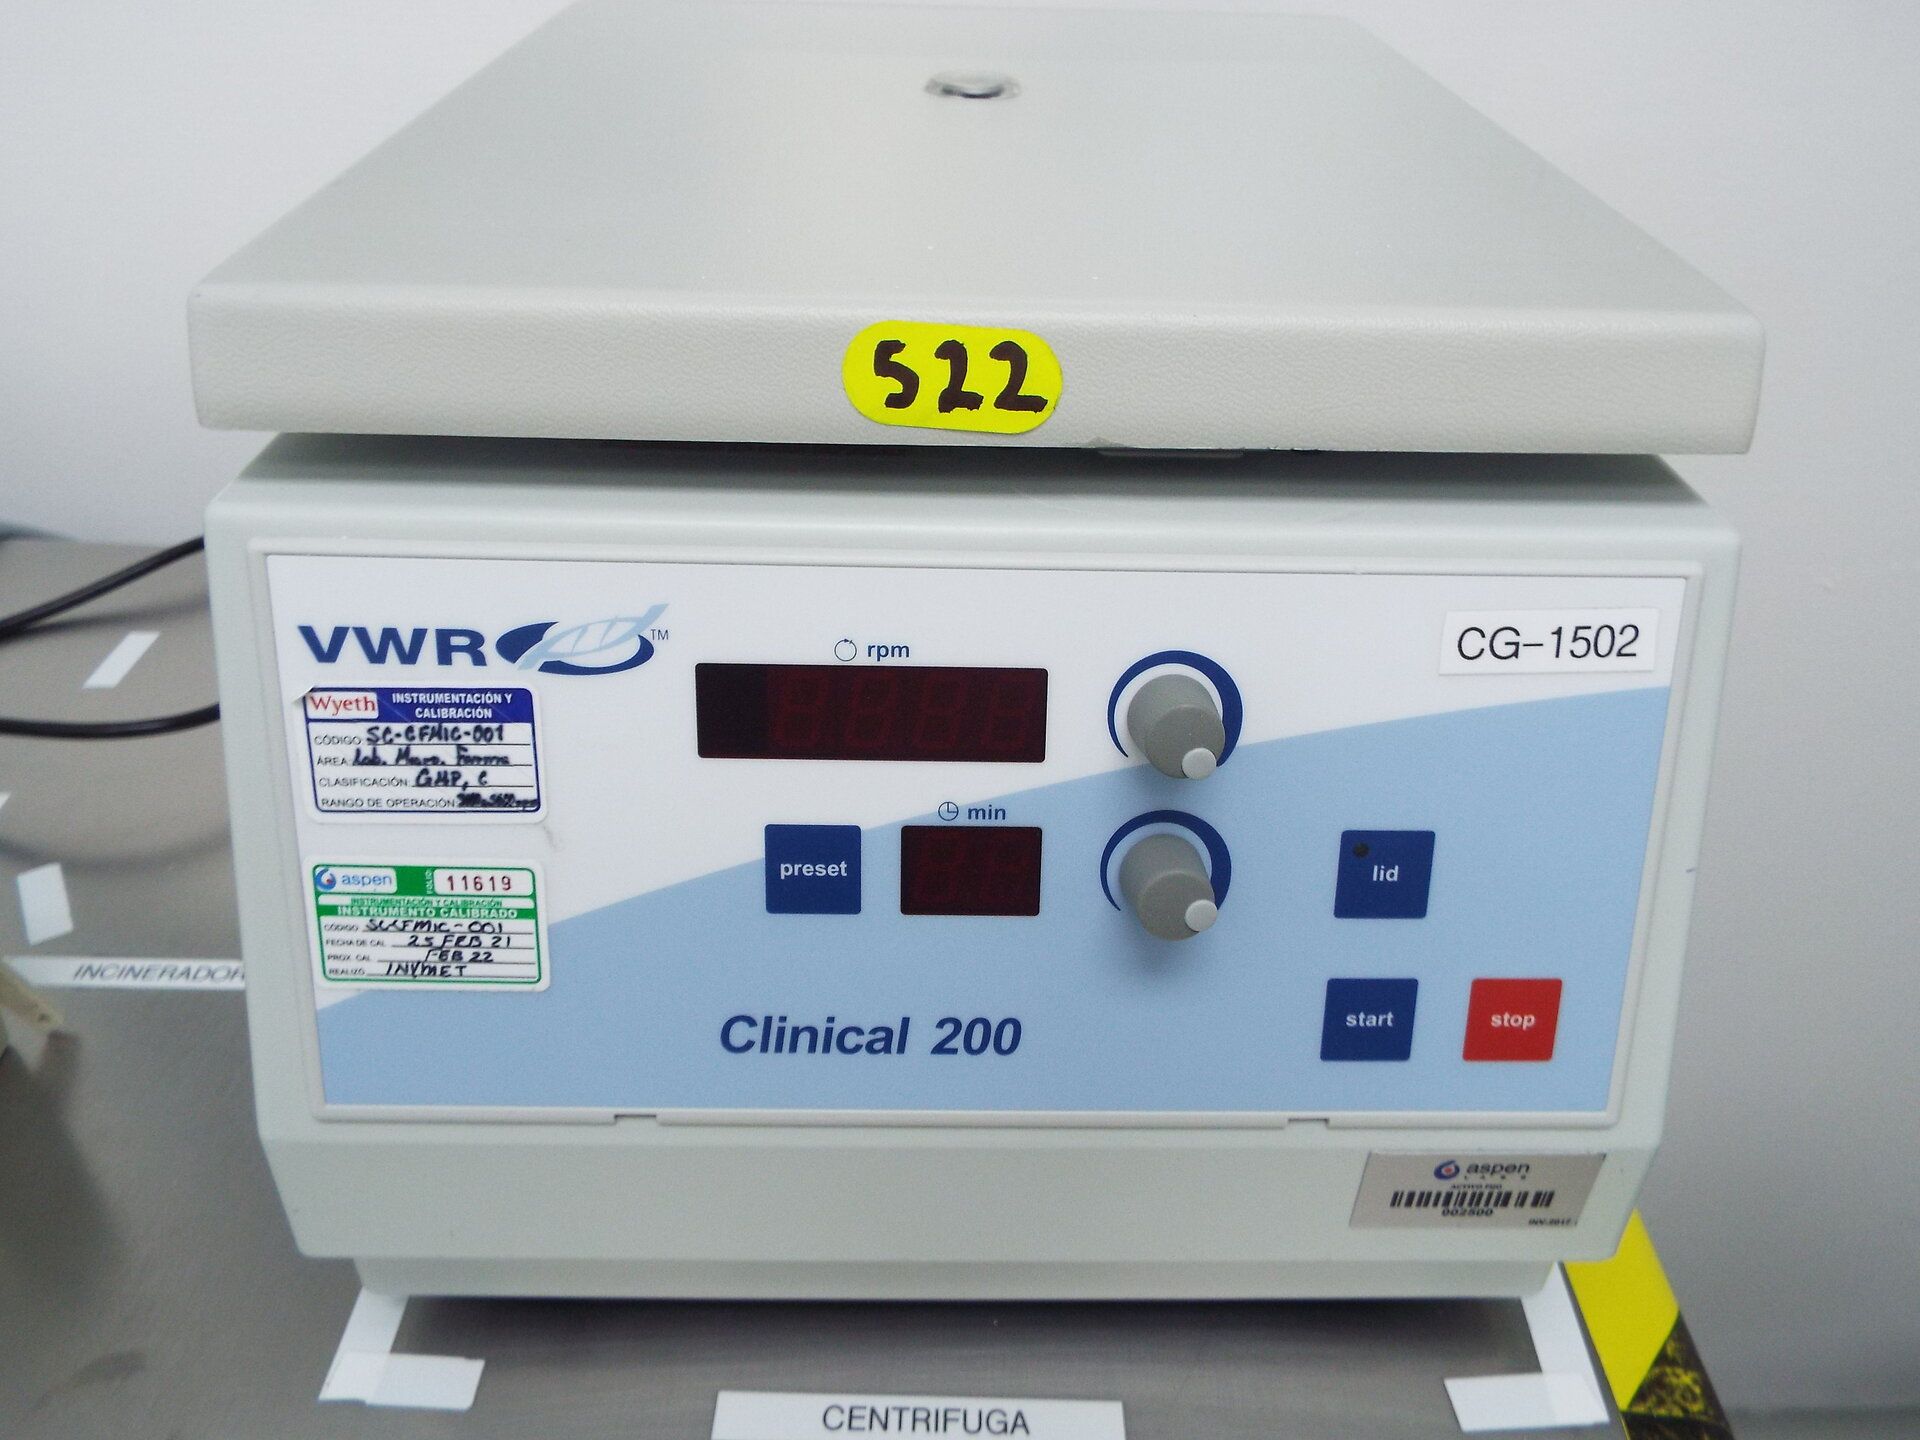 VWR Clinical 200 centrifuge